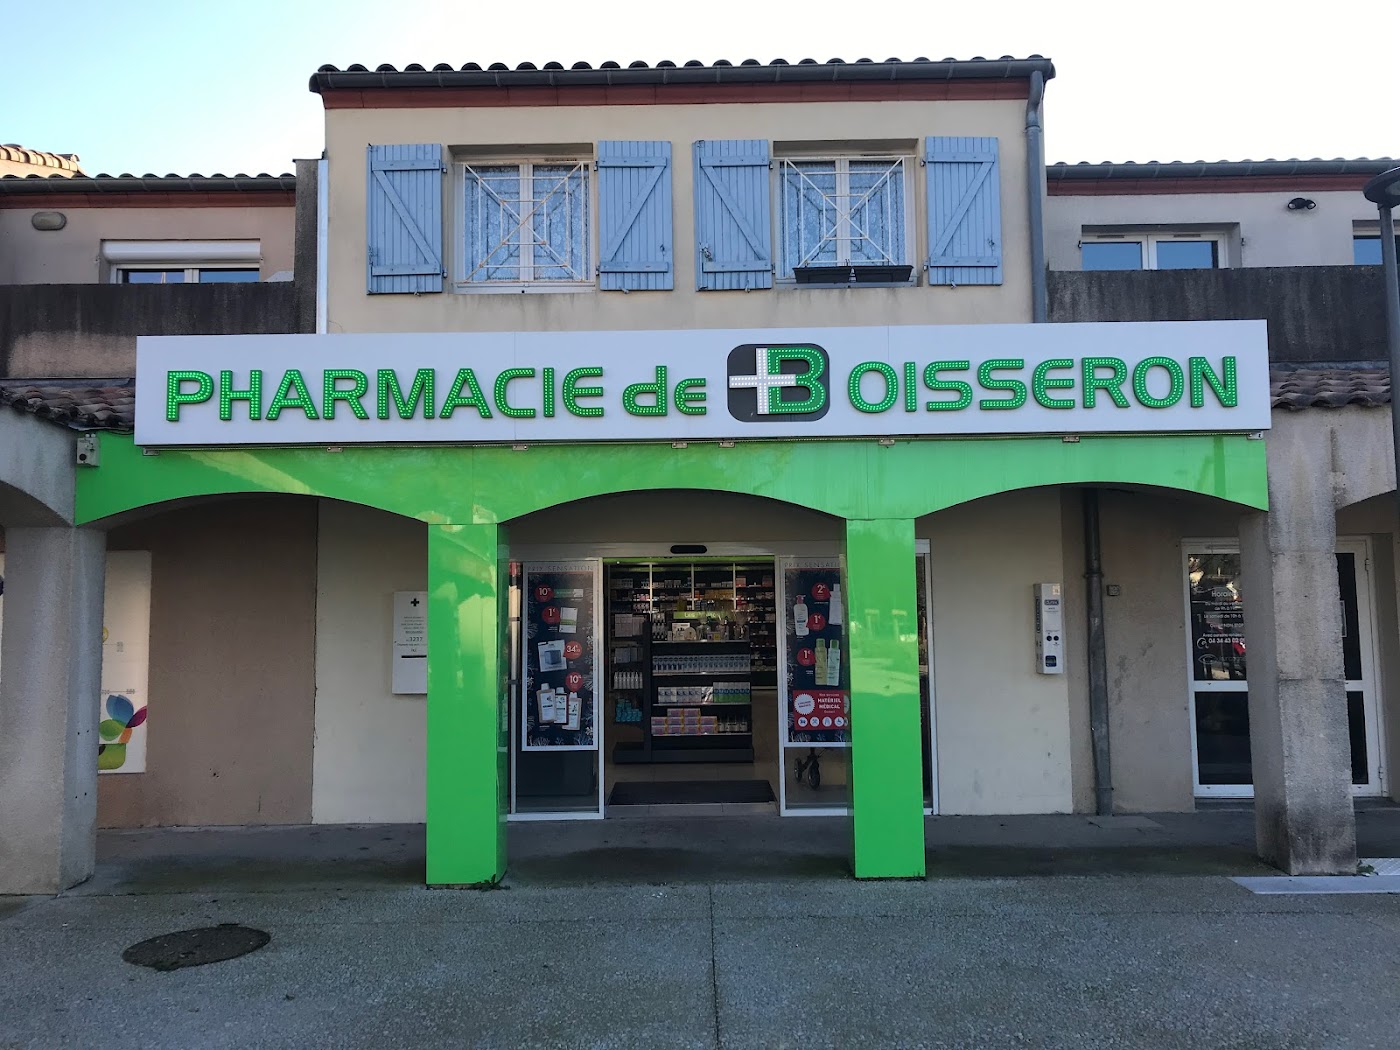 Pharmacie de Boisseron